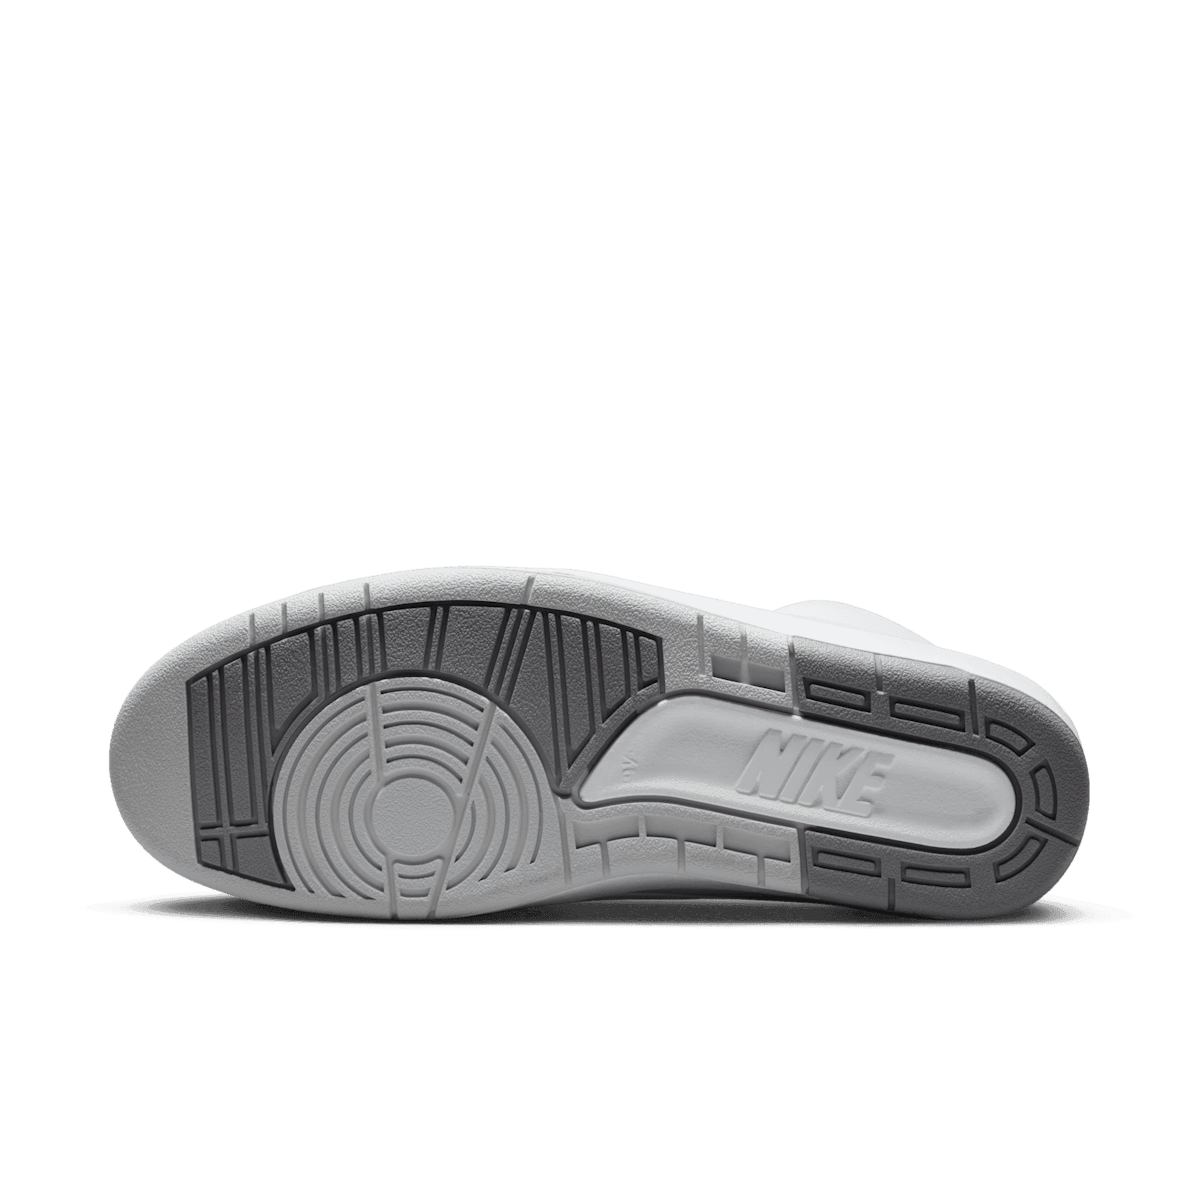 Air Jordan 2 Cement Grey Angle 0